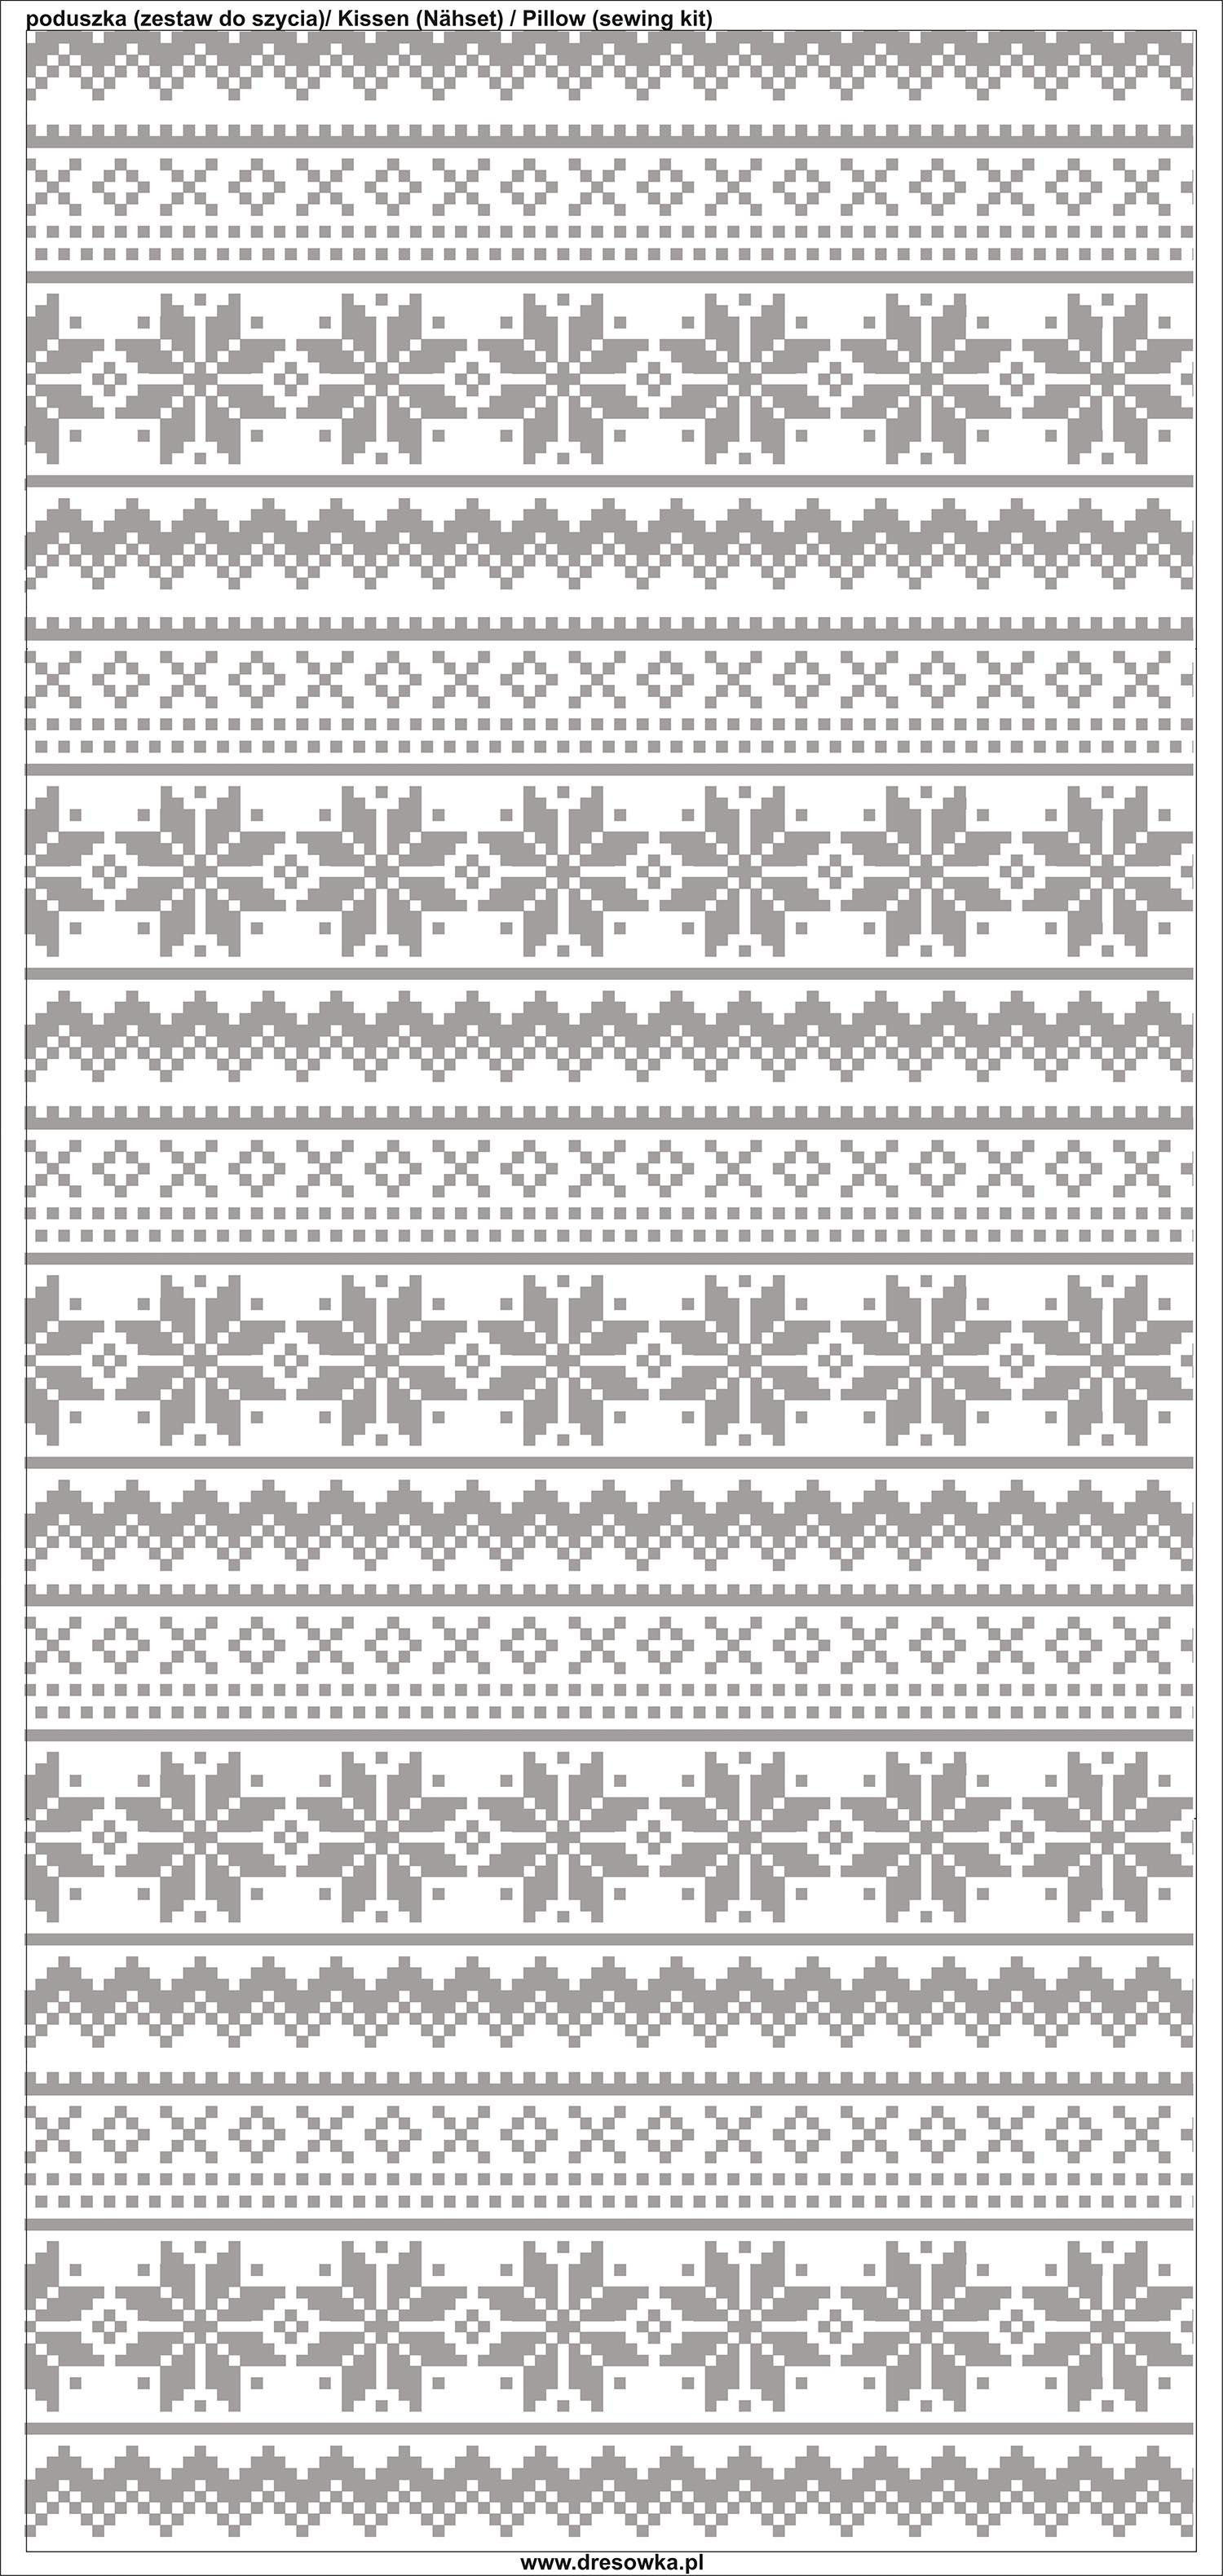 PILLOW 45X45 - ALPINE FLOWERS / grey stripes - sewing set